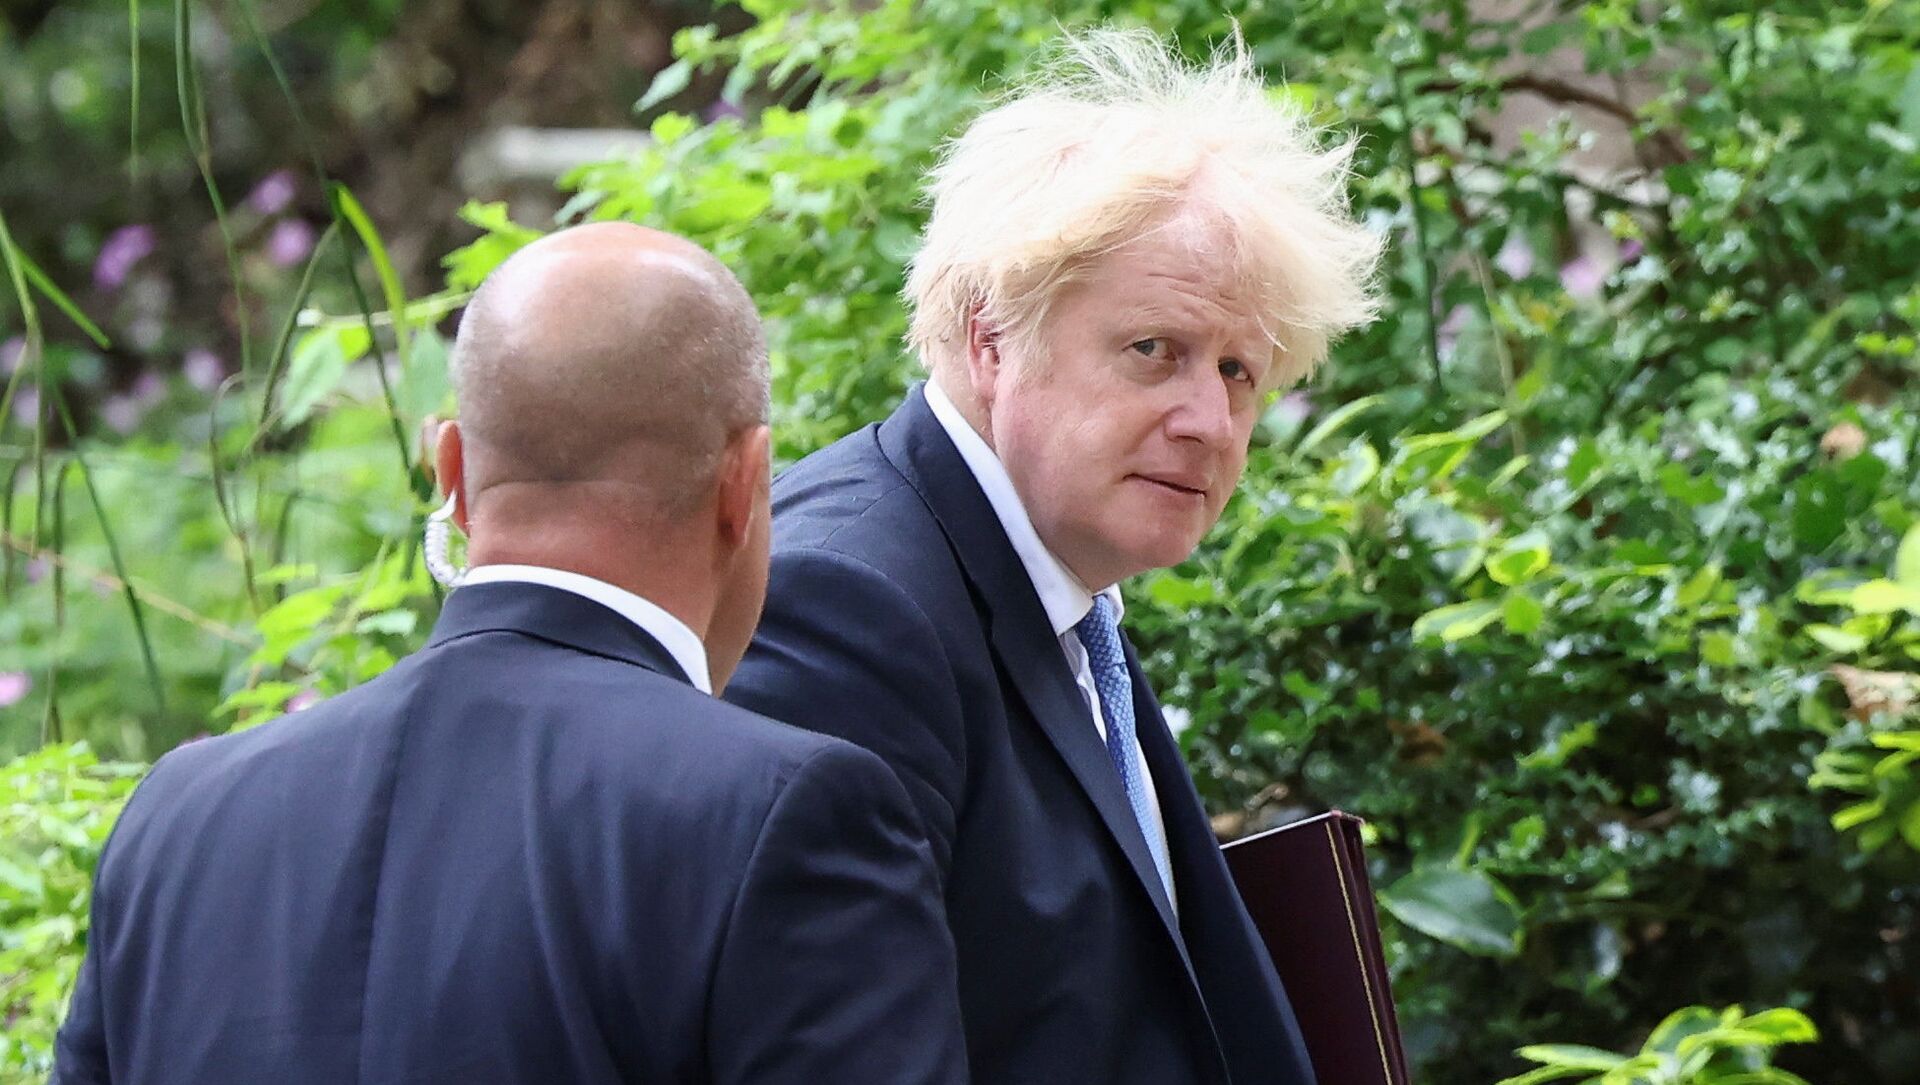 Britain's Prime Minister Boris Johnson walks in Downing Street, in London, Britain, June 29, 2021 - Sputnik International, 1920, 05.07.2021